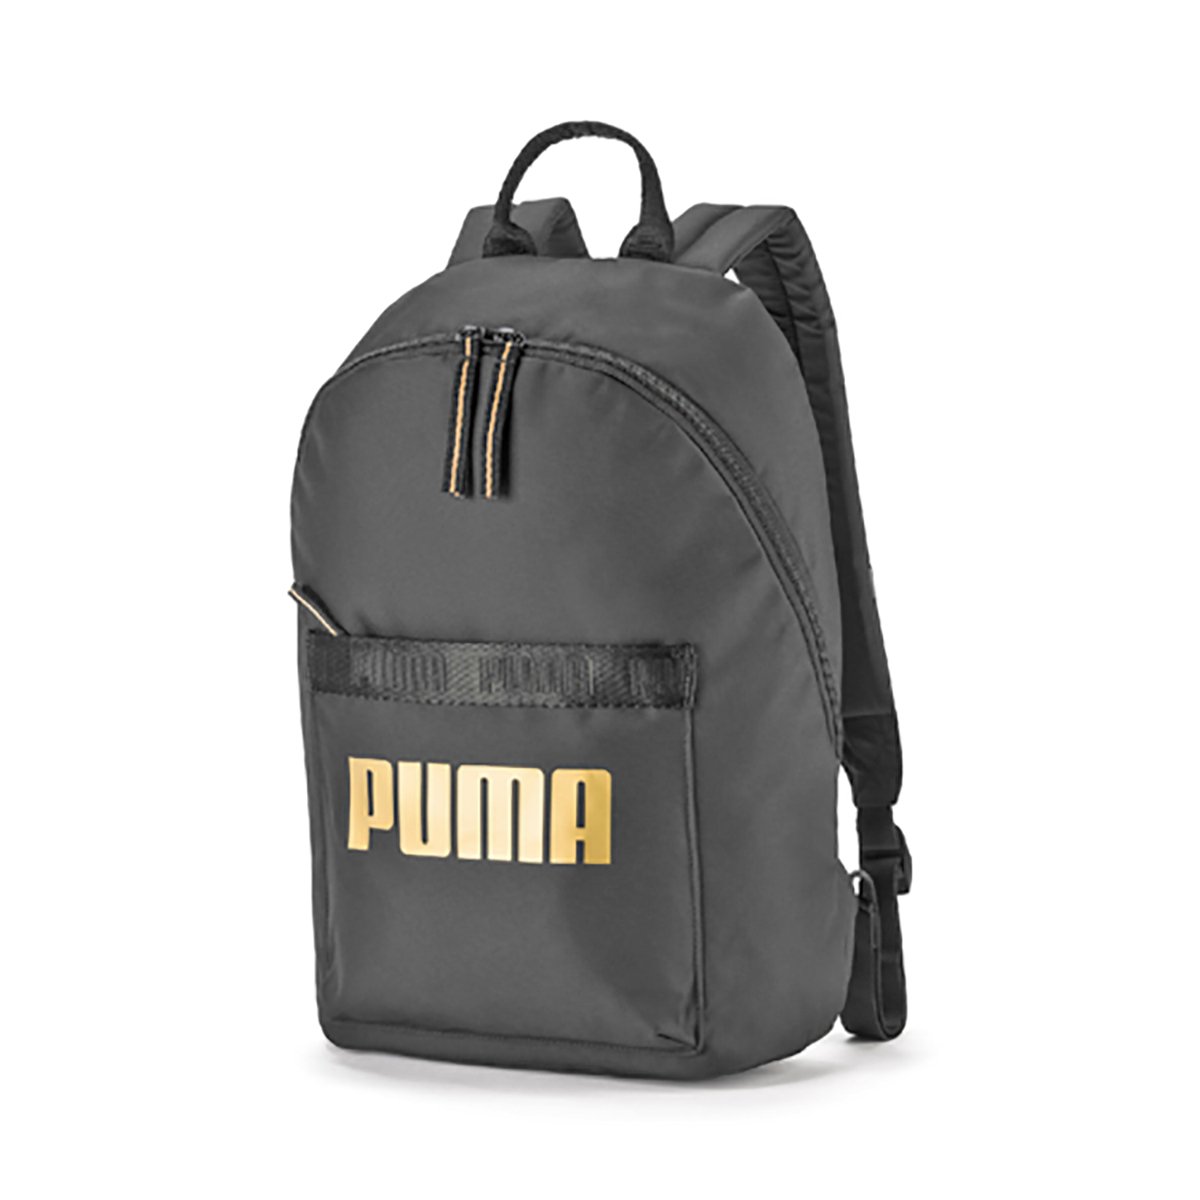 Puma Core Base 14L Backpack Review